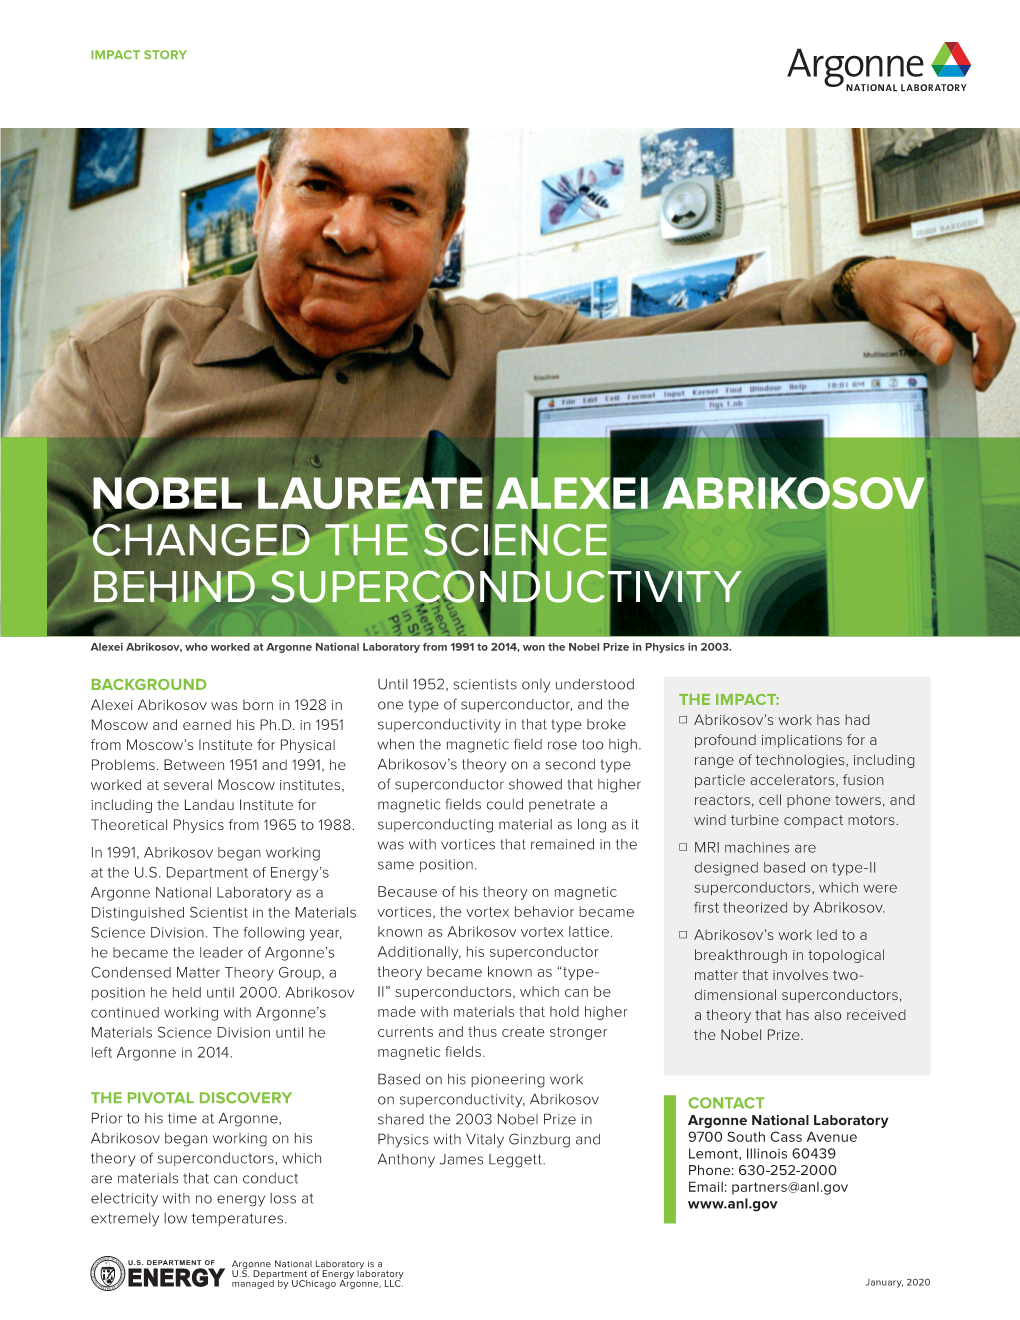 Nobel Laureate Alexei Abrikosov Changed the Science Behind Superconductivity